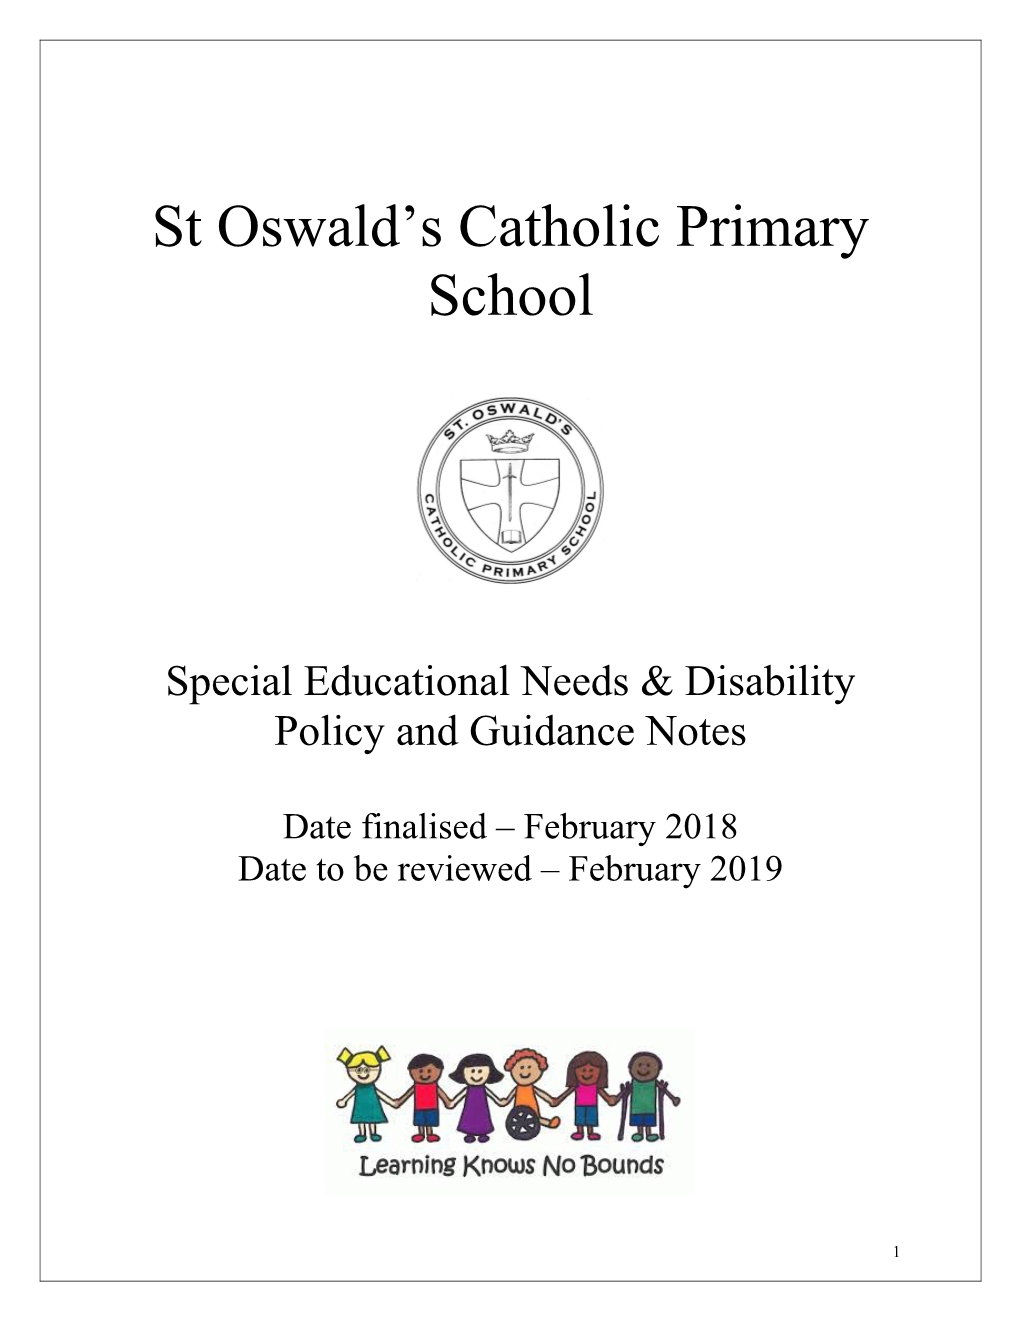 St Oswald S Catholic Primary School